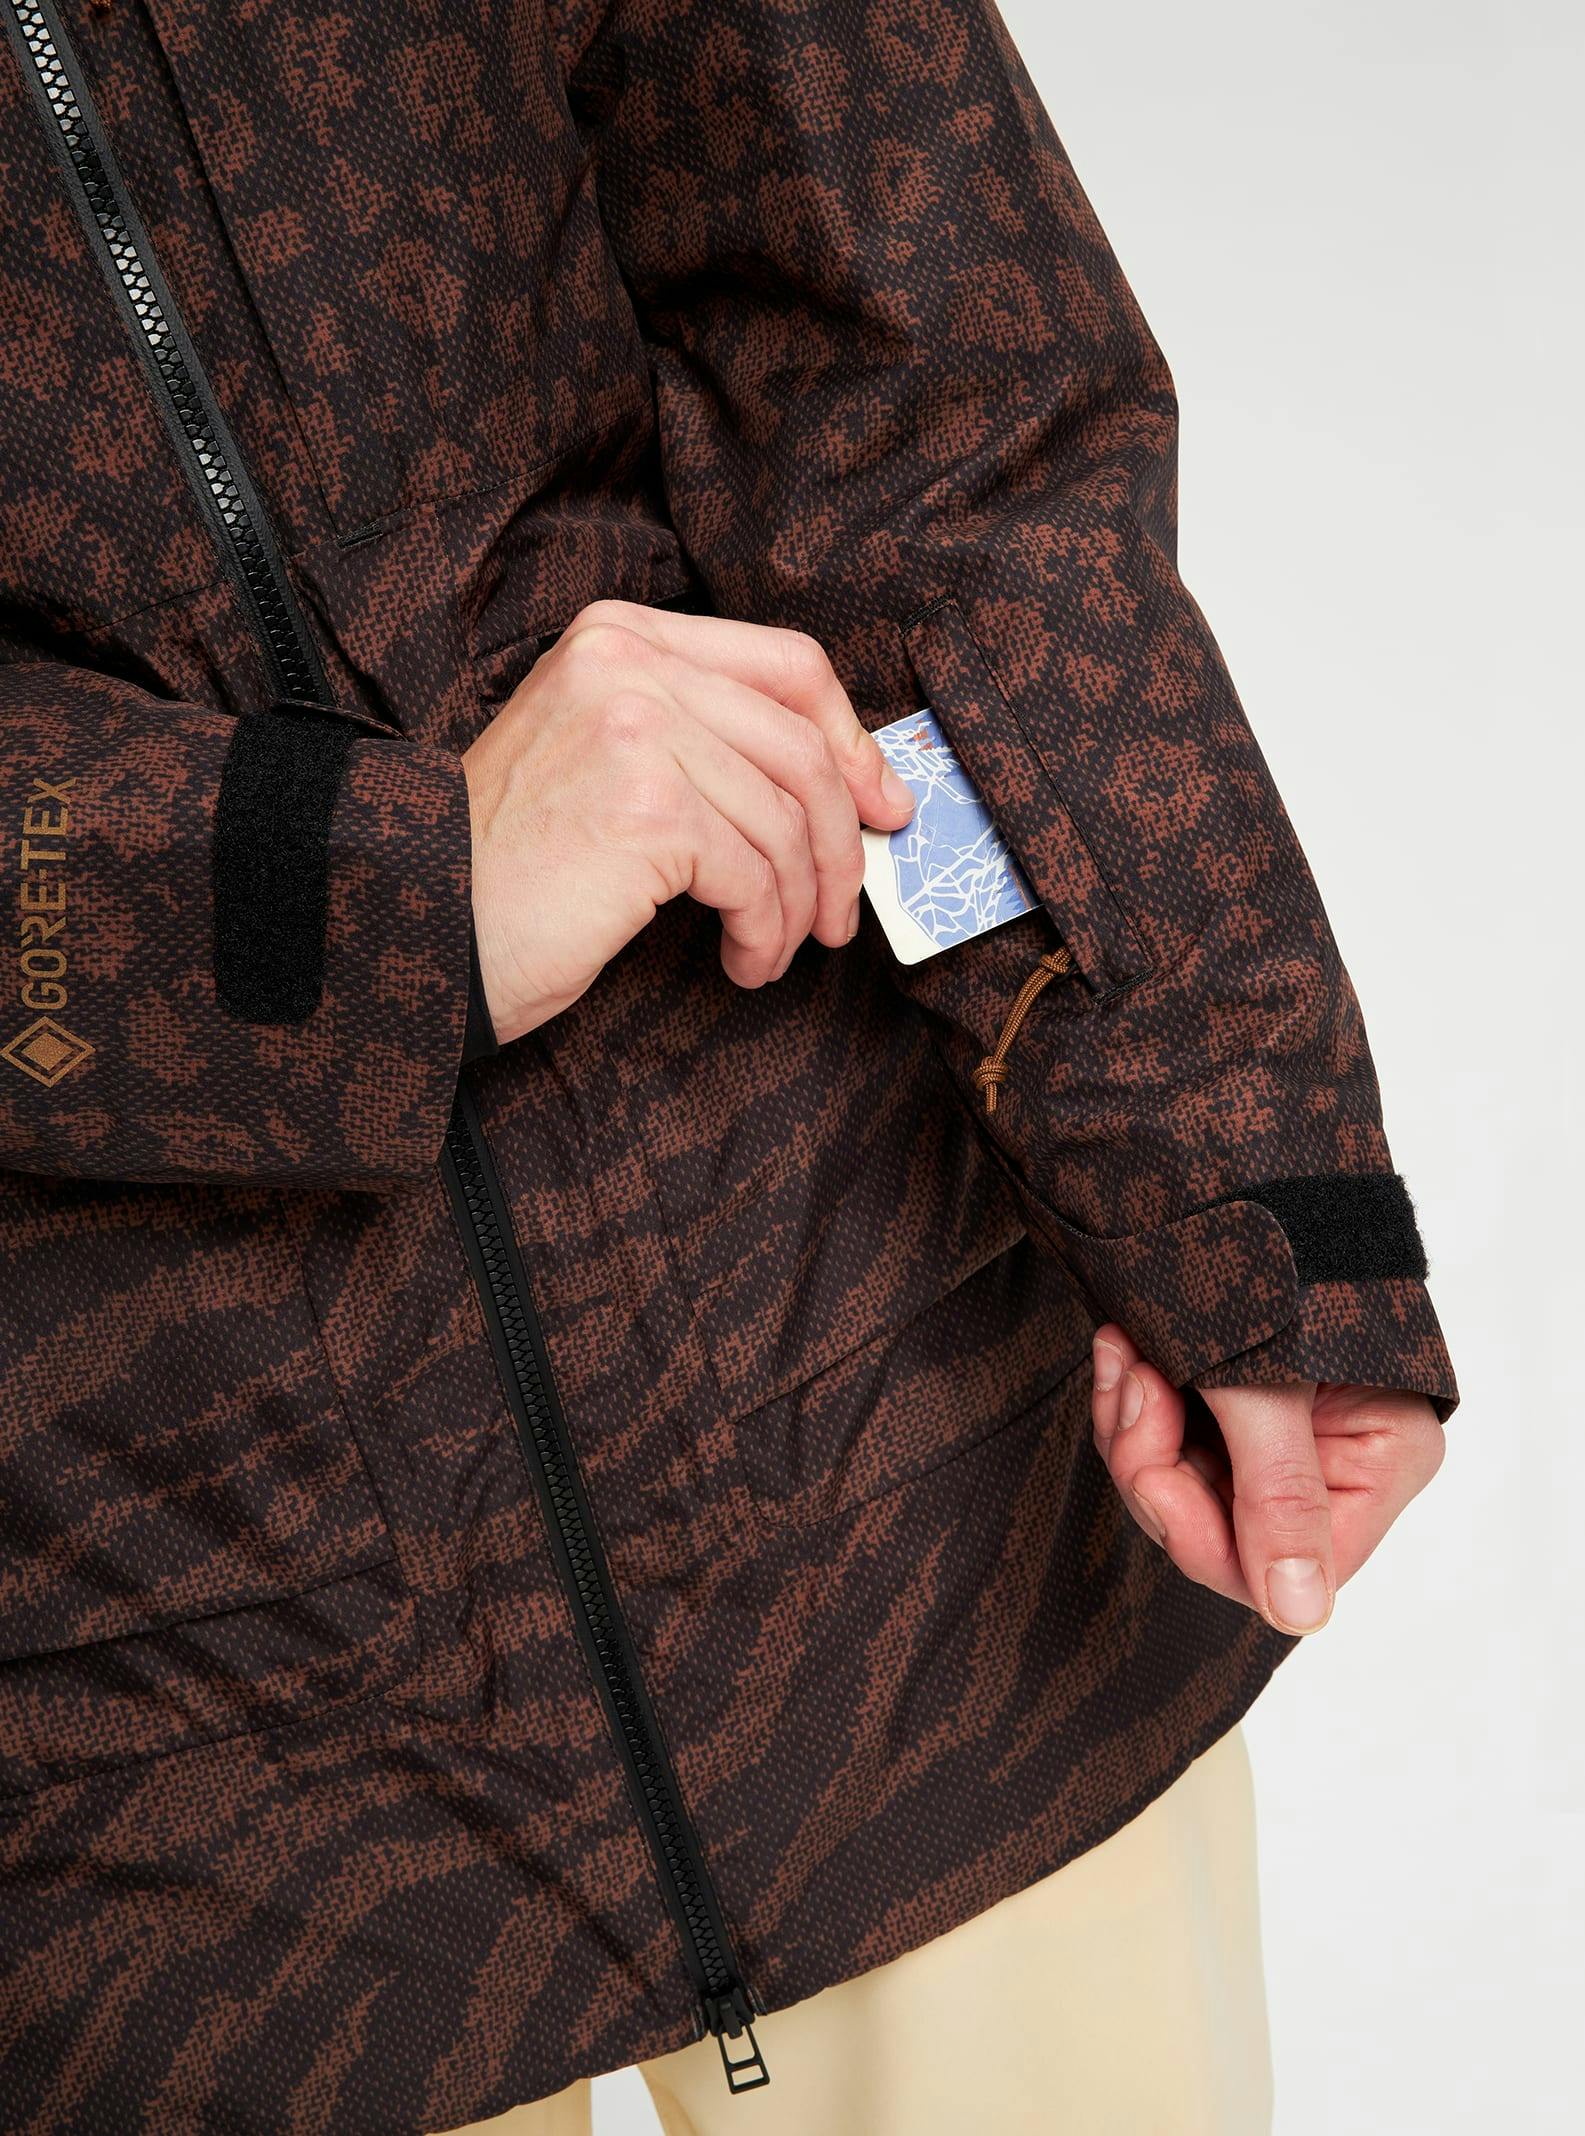 Burton Women's Treeline GORE-TEX 2L Insulated Jacket